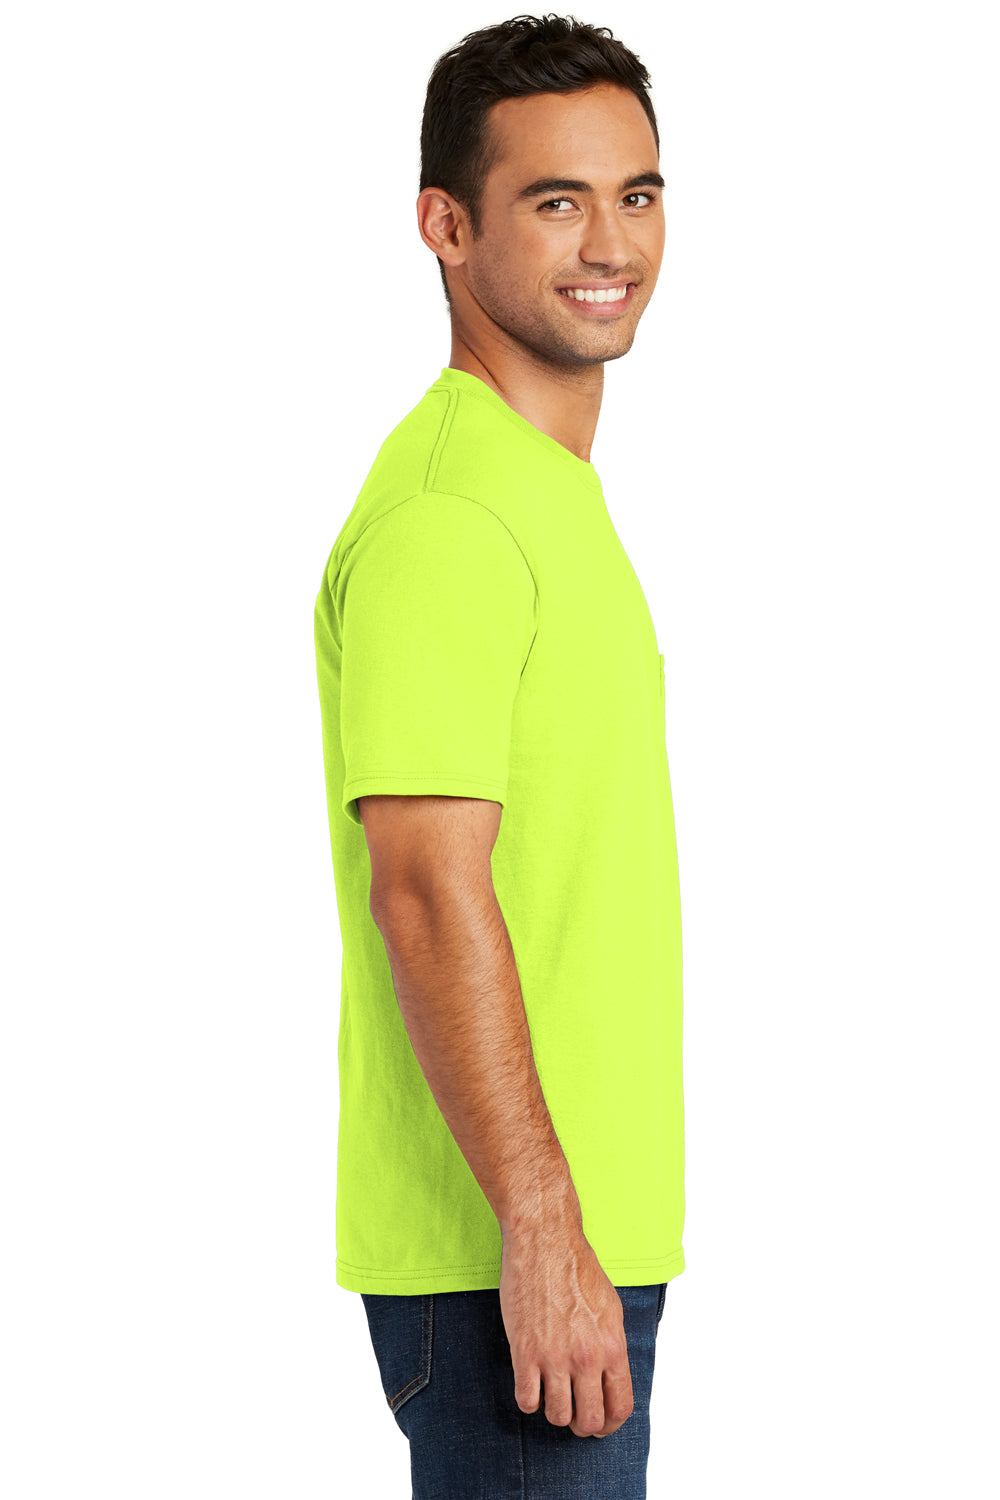 Port & Company USA100P Mens USA Made Short Sleeve Crewneck T-Shirt w/ Pocket Safety Green Side